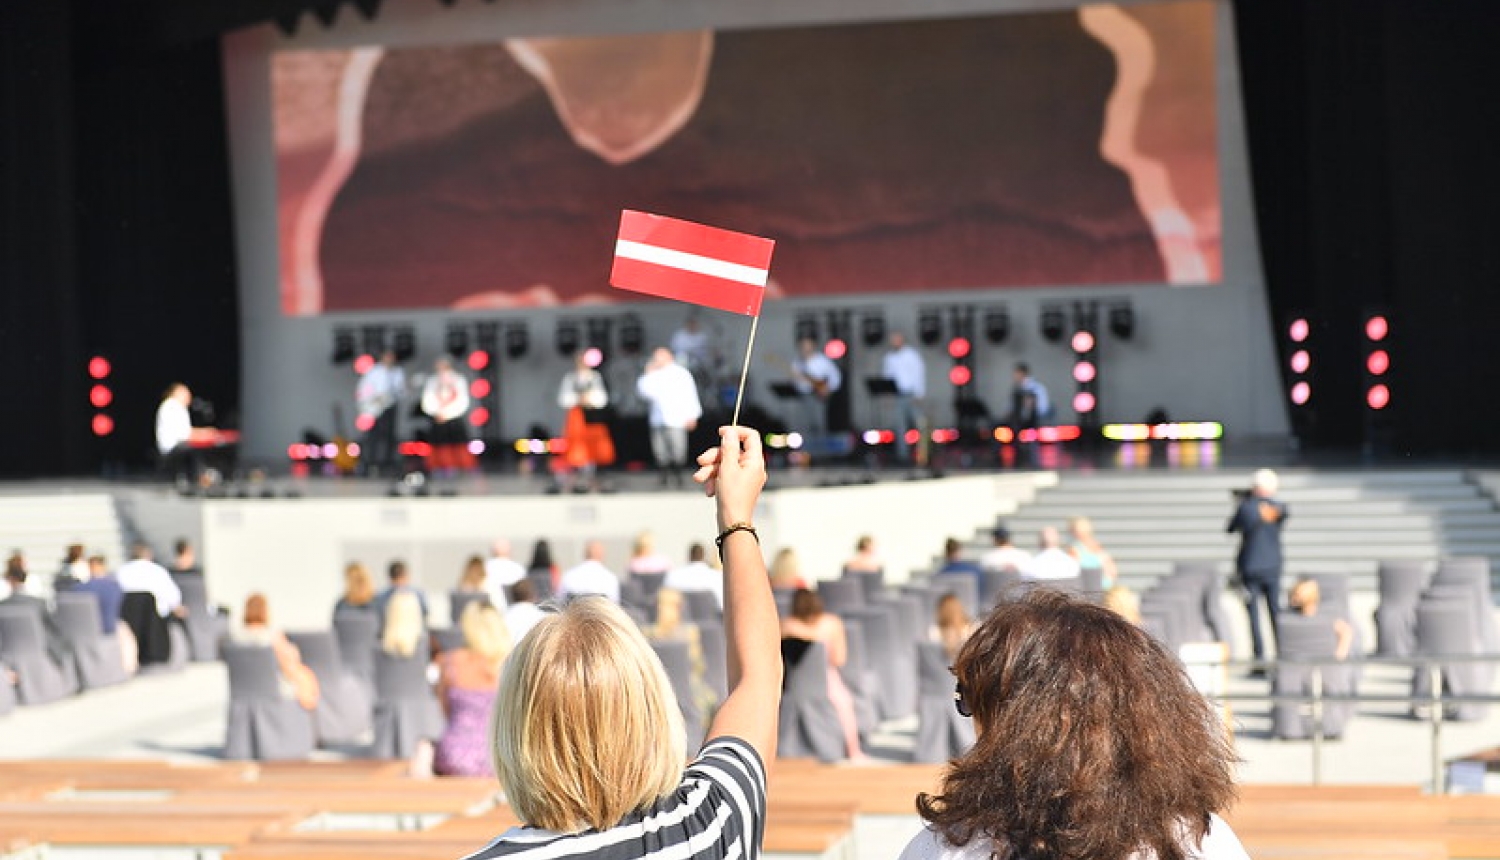 sieviete tur rokā Latvijas karogu